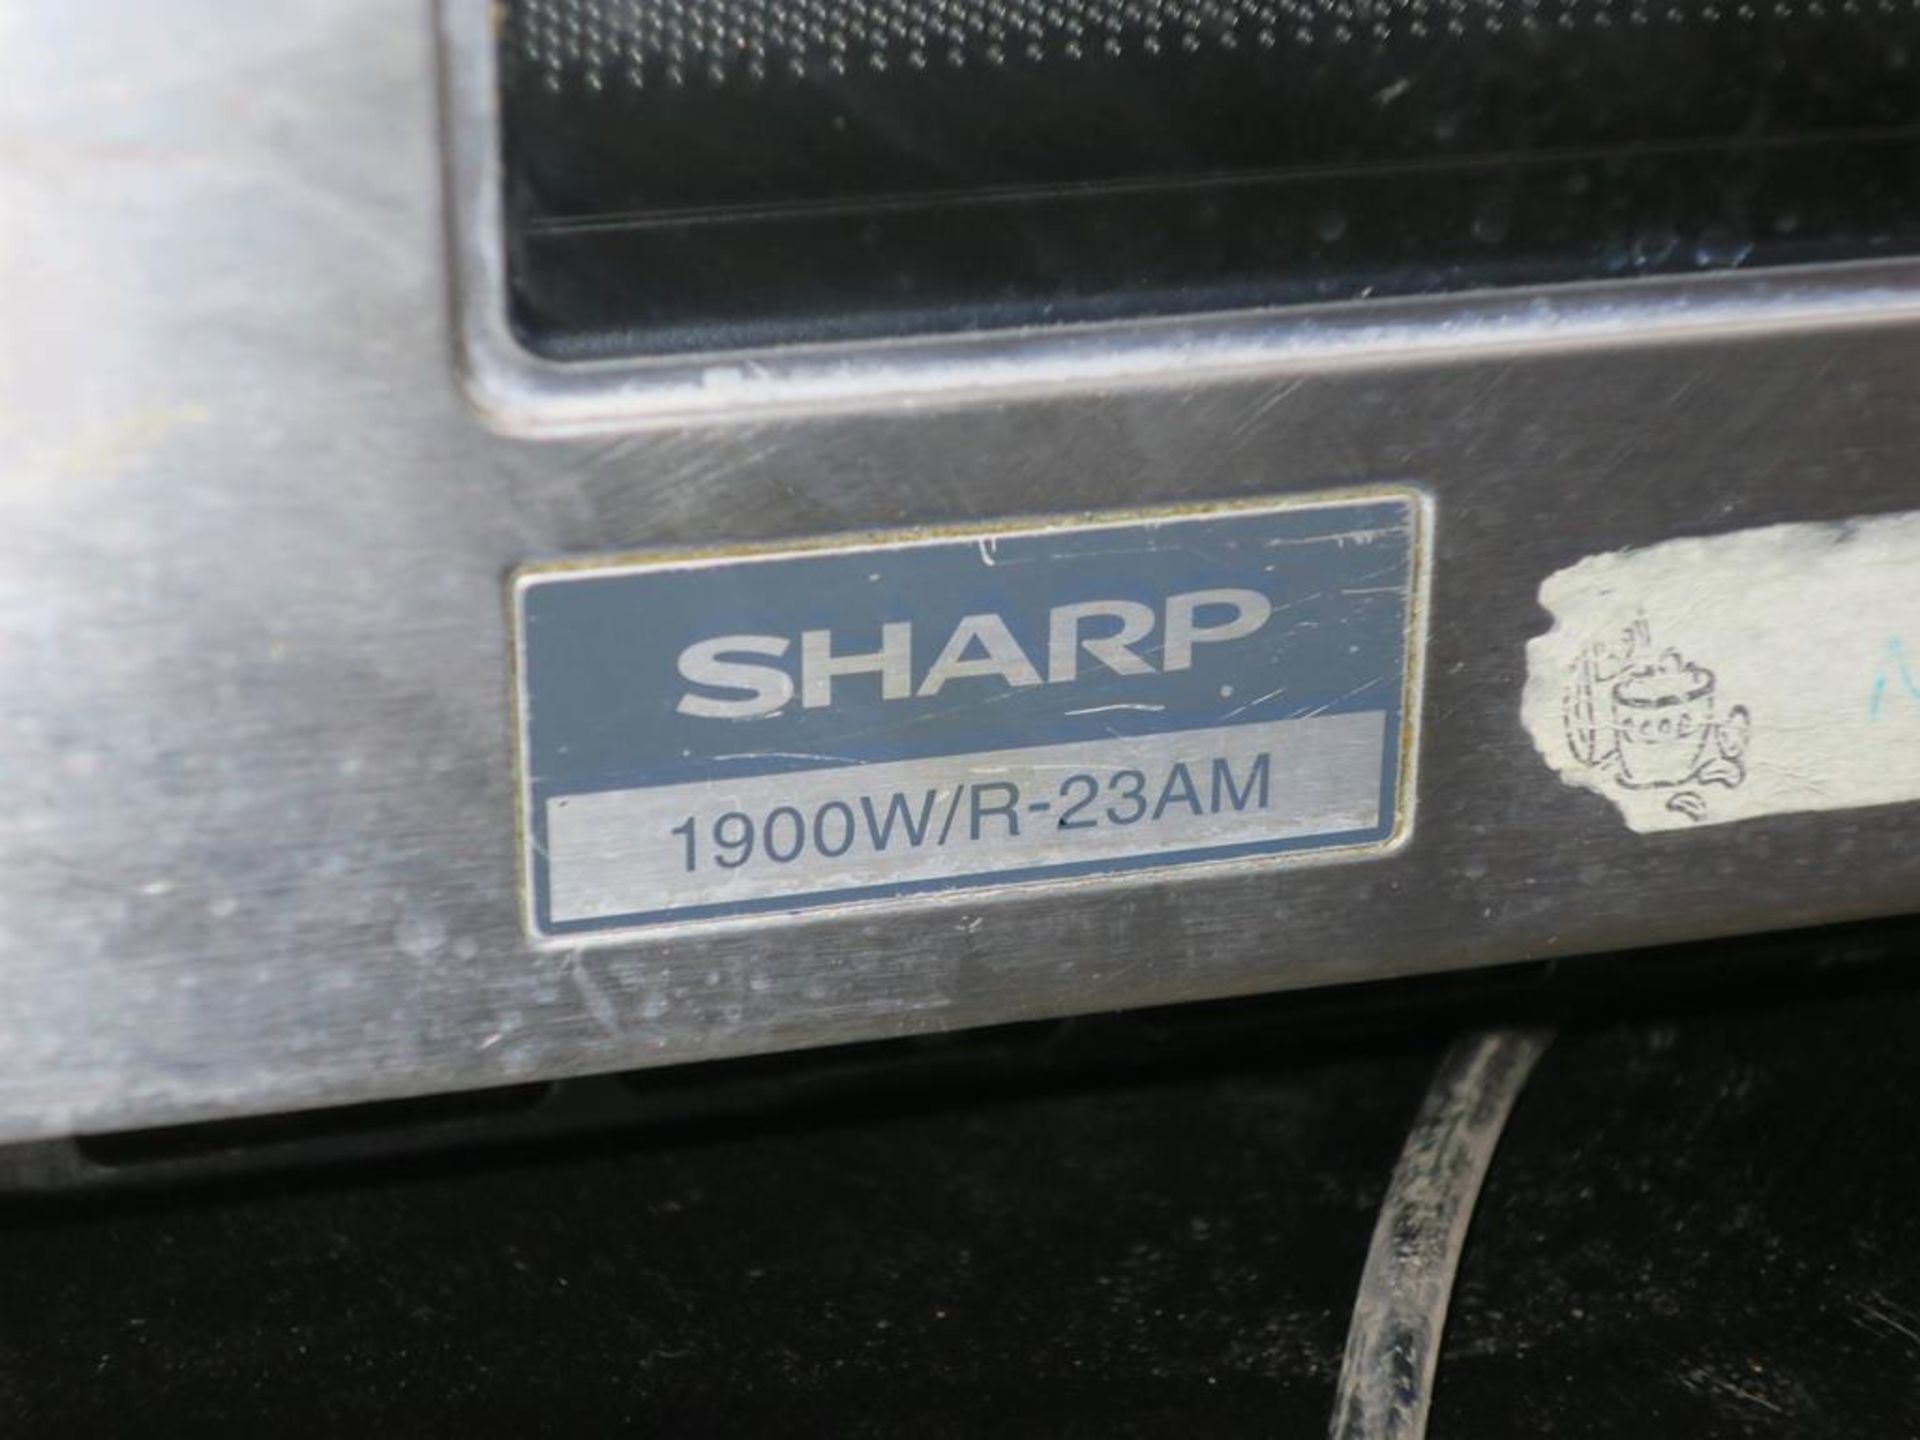 Sharp 1900W/R-23AM Microwave - Image 2 of 3